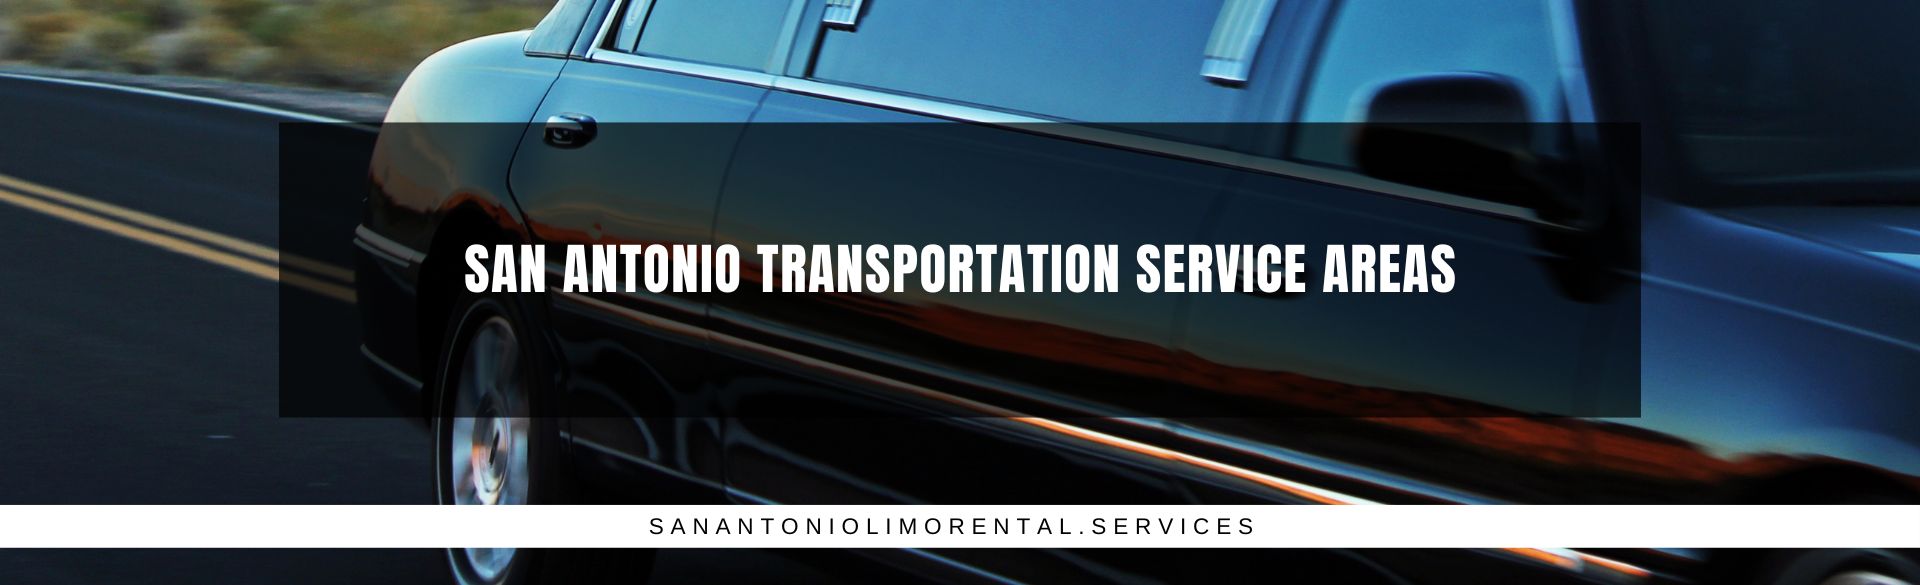 San Antonio Transportation Service Areas